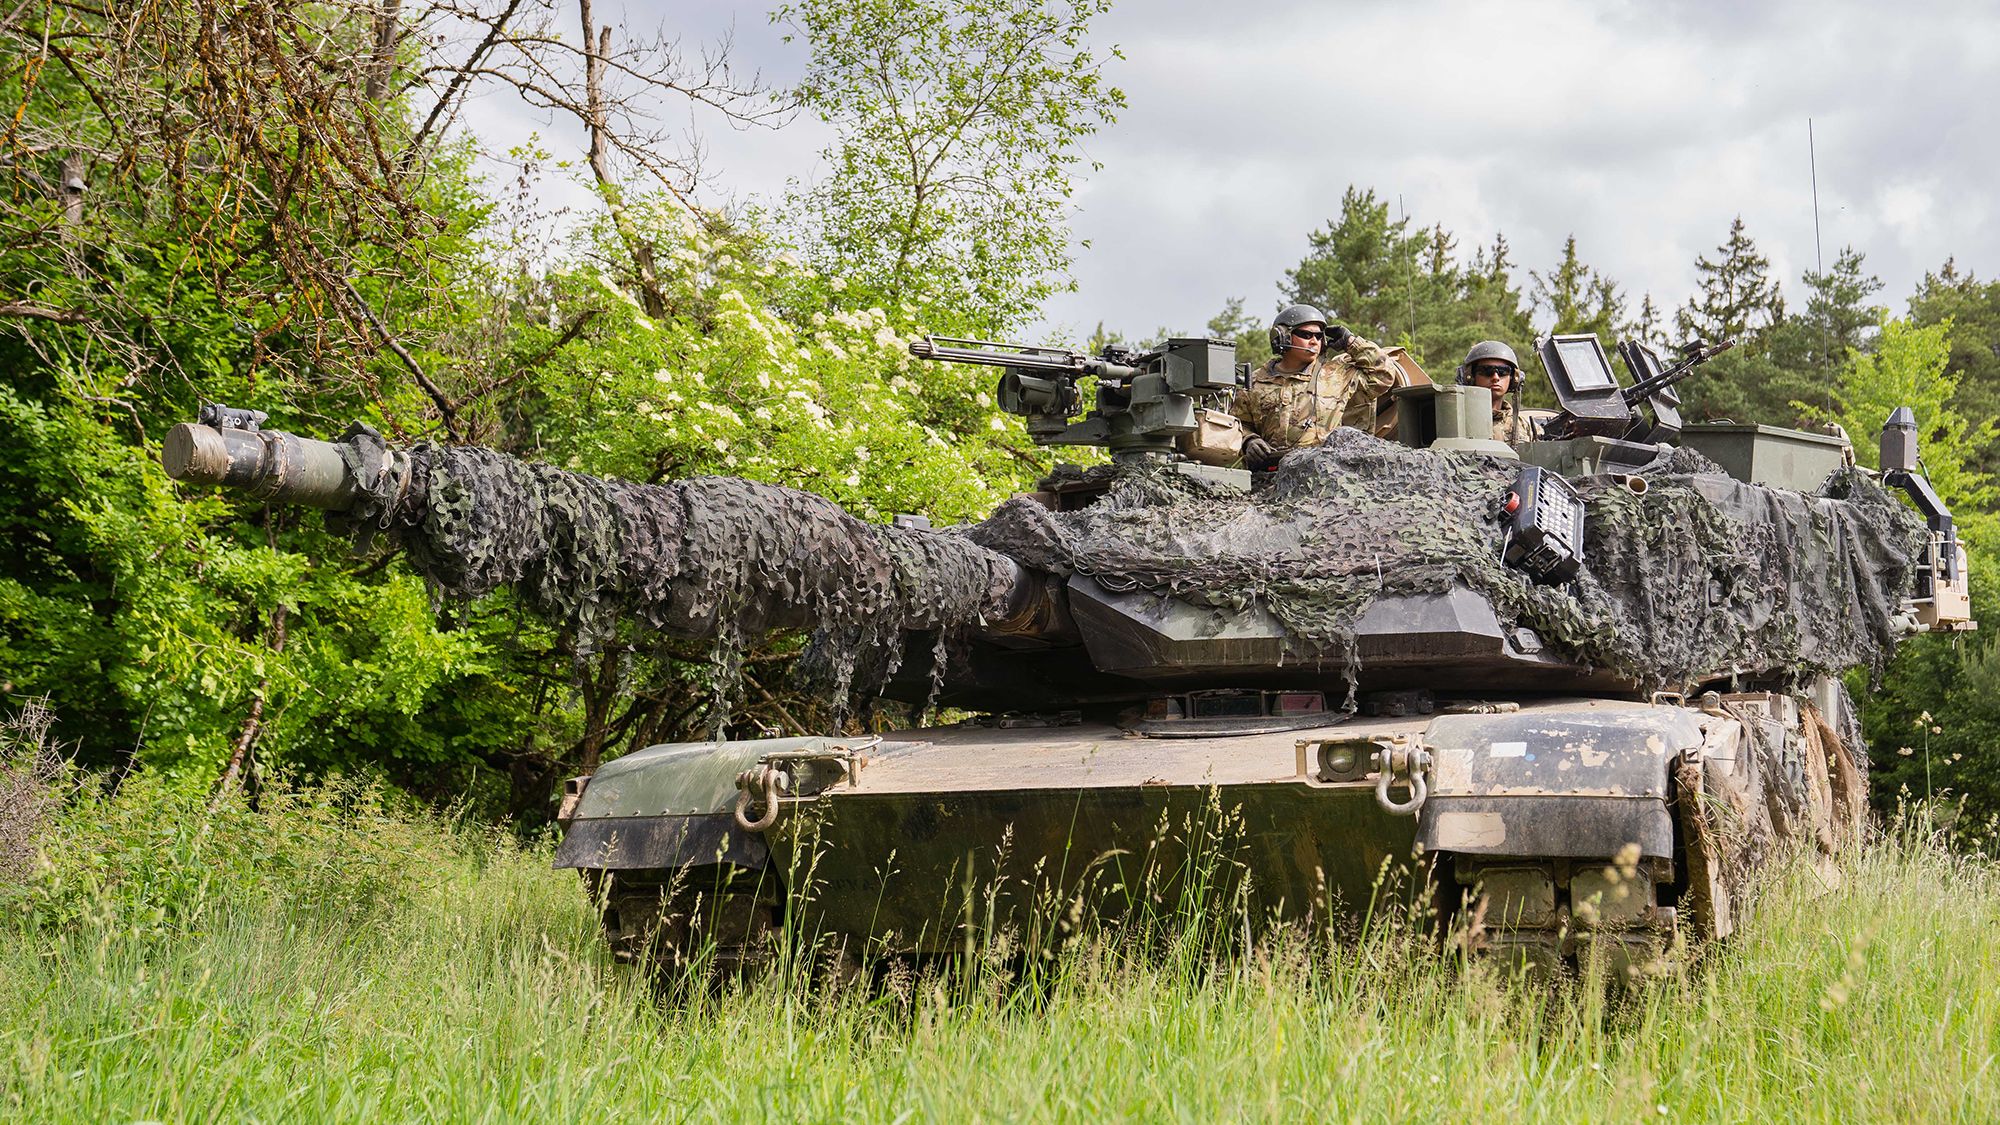 Ukrainske stridsvognsoldater viste hvordan de trener på amerikanske M1A1 Abrams-stridsvogner.